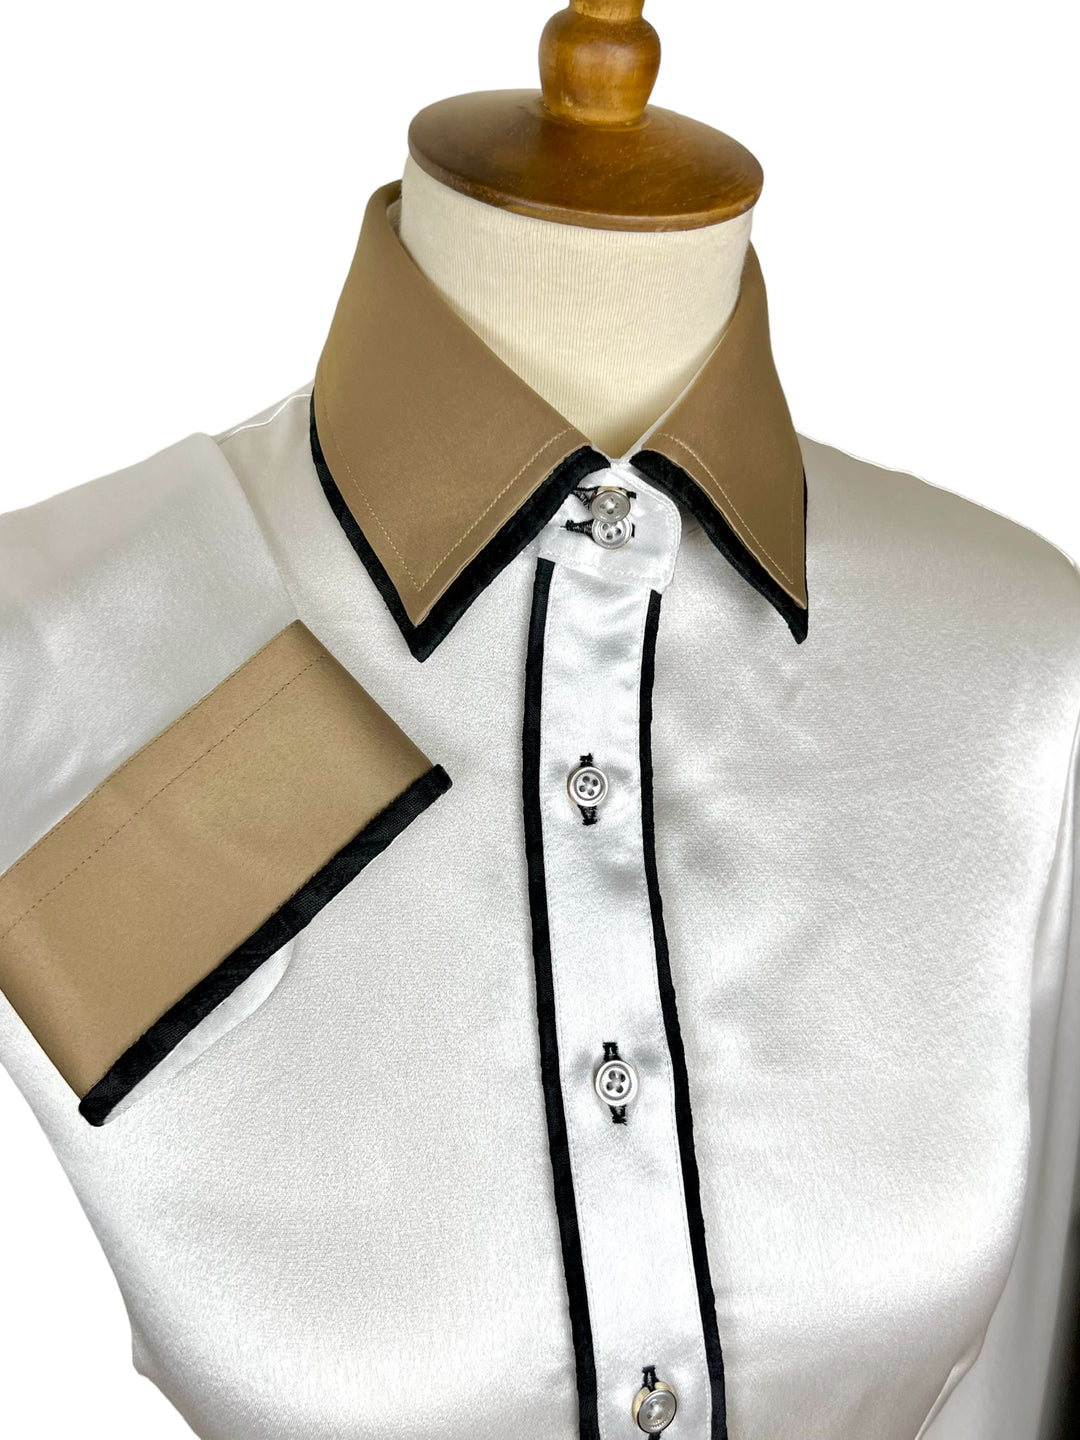 The Etta Halter Vest & Shirt Set